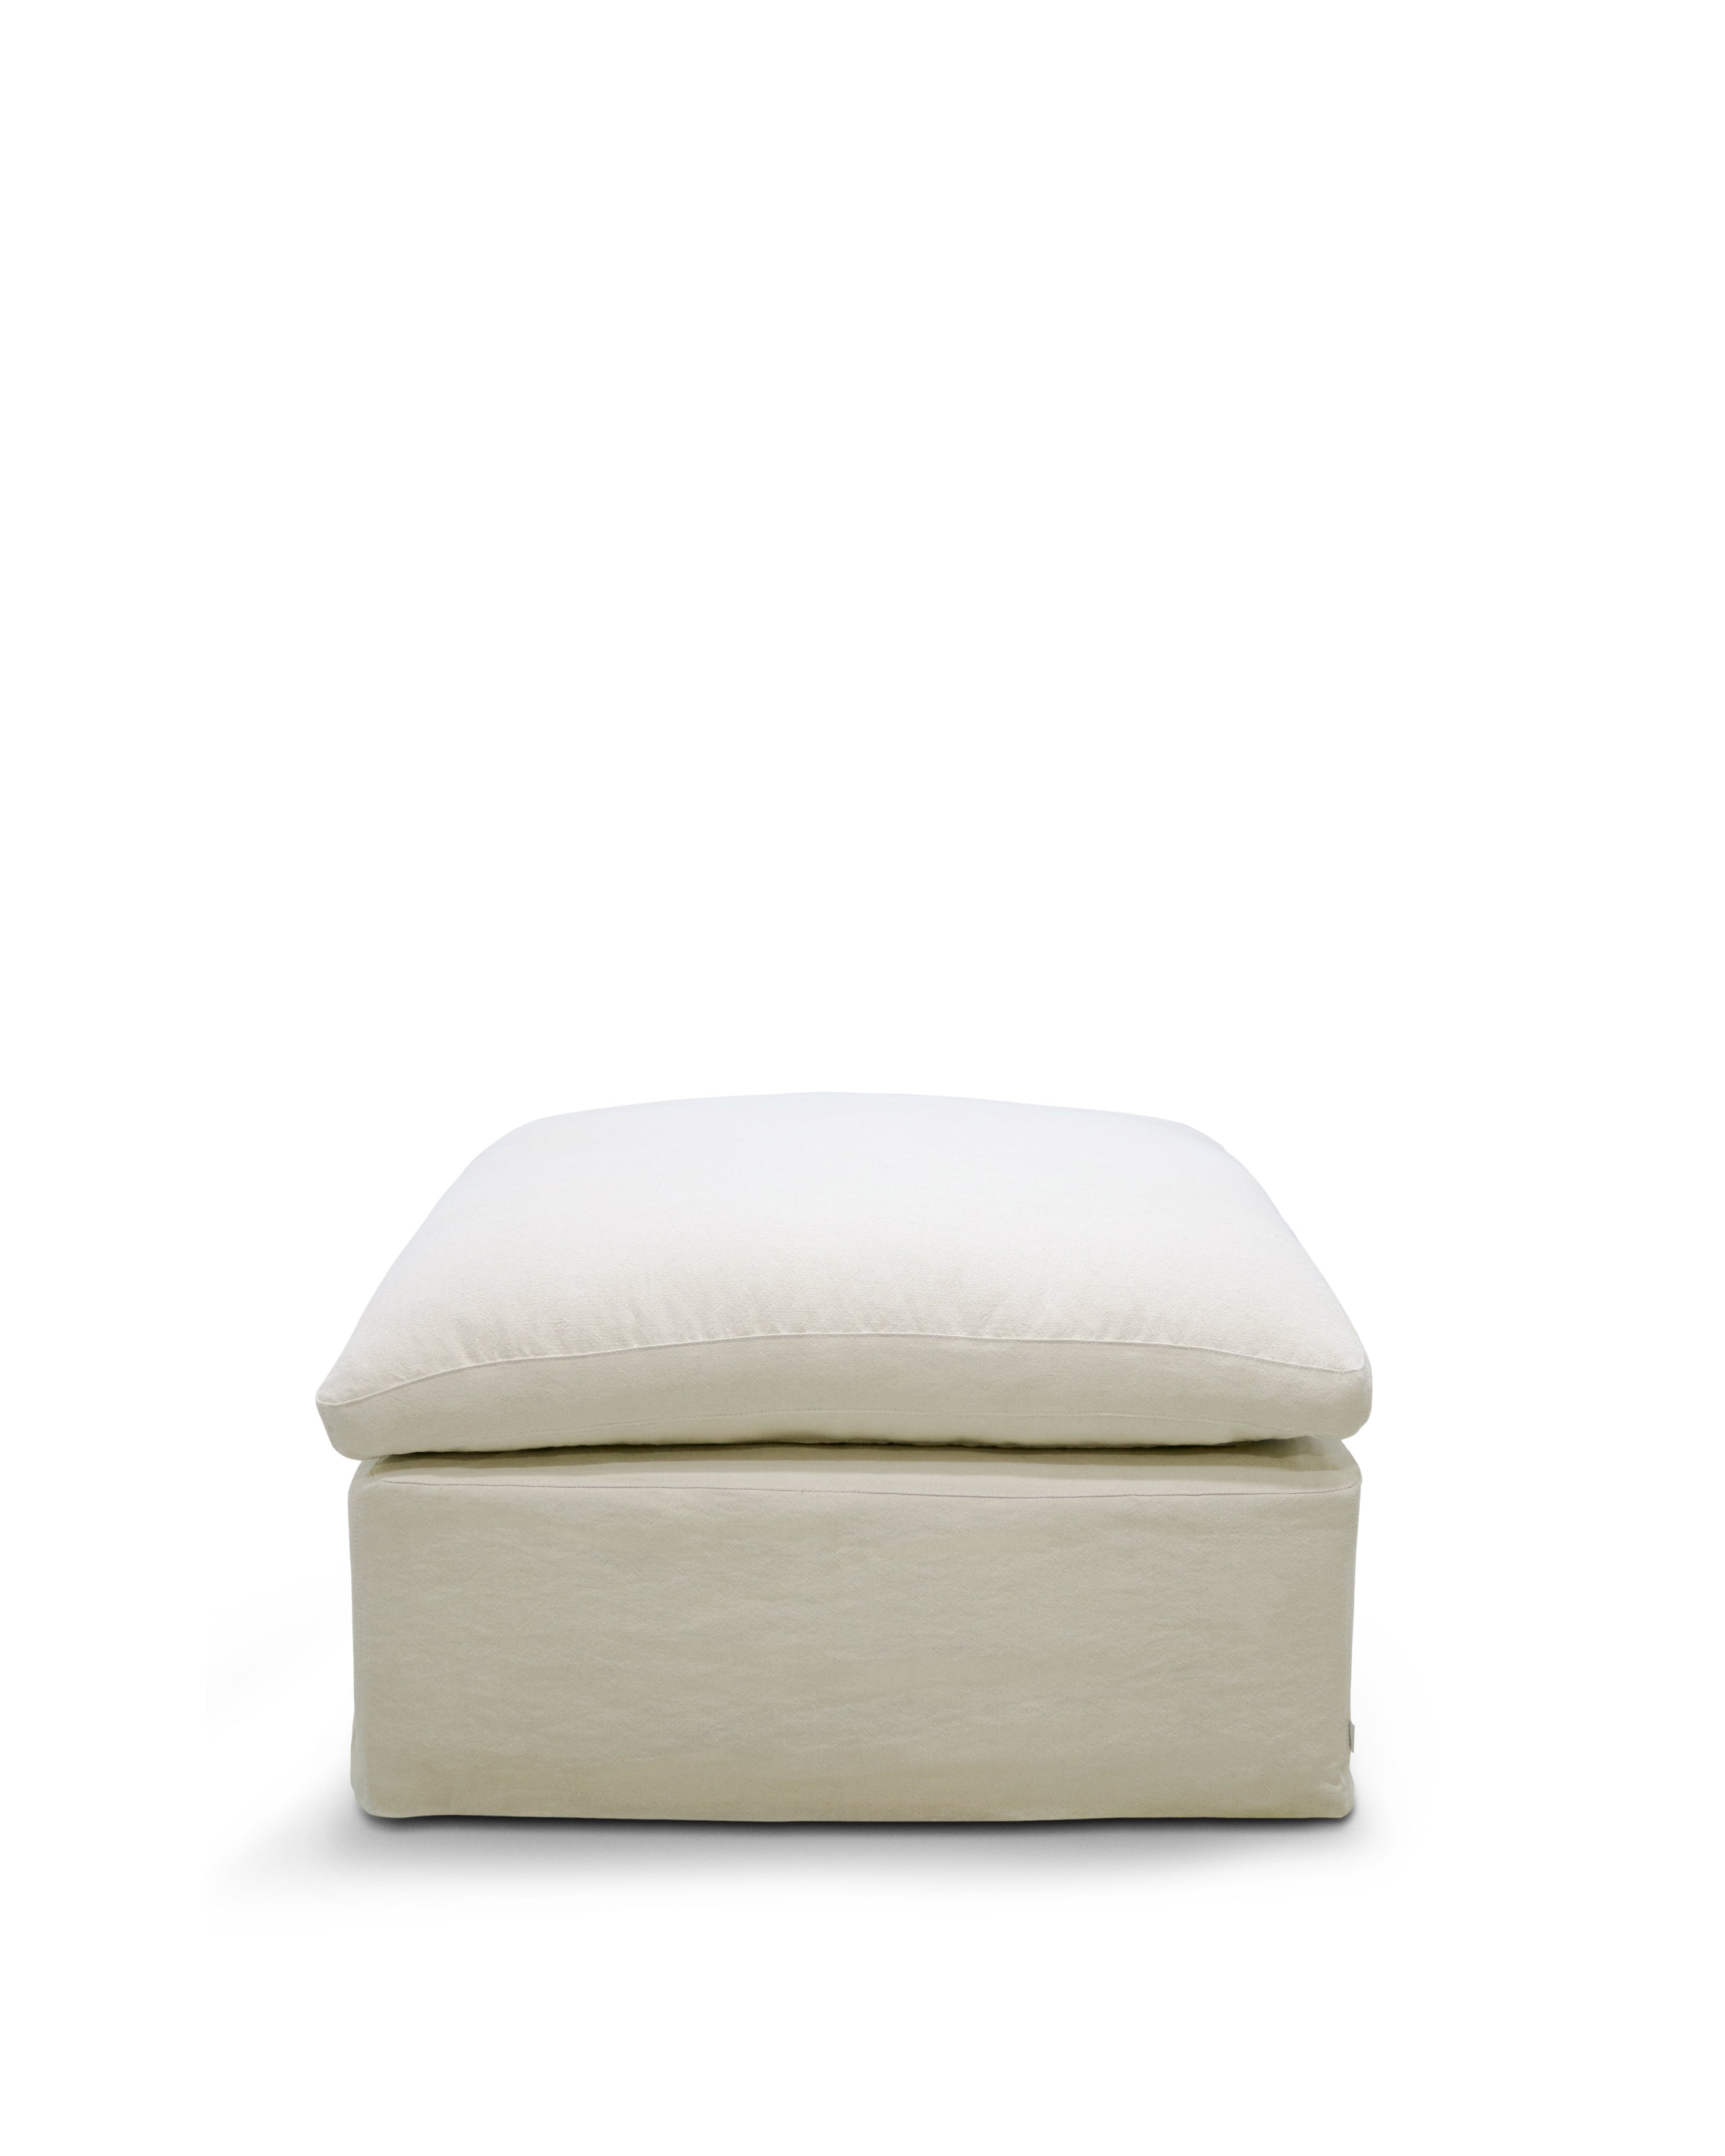 Zenira footrest cover in beige cotton and linen, 90 x 90 cm